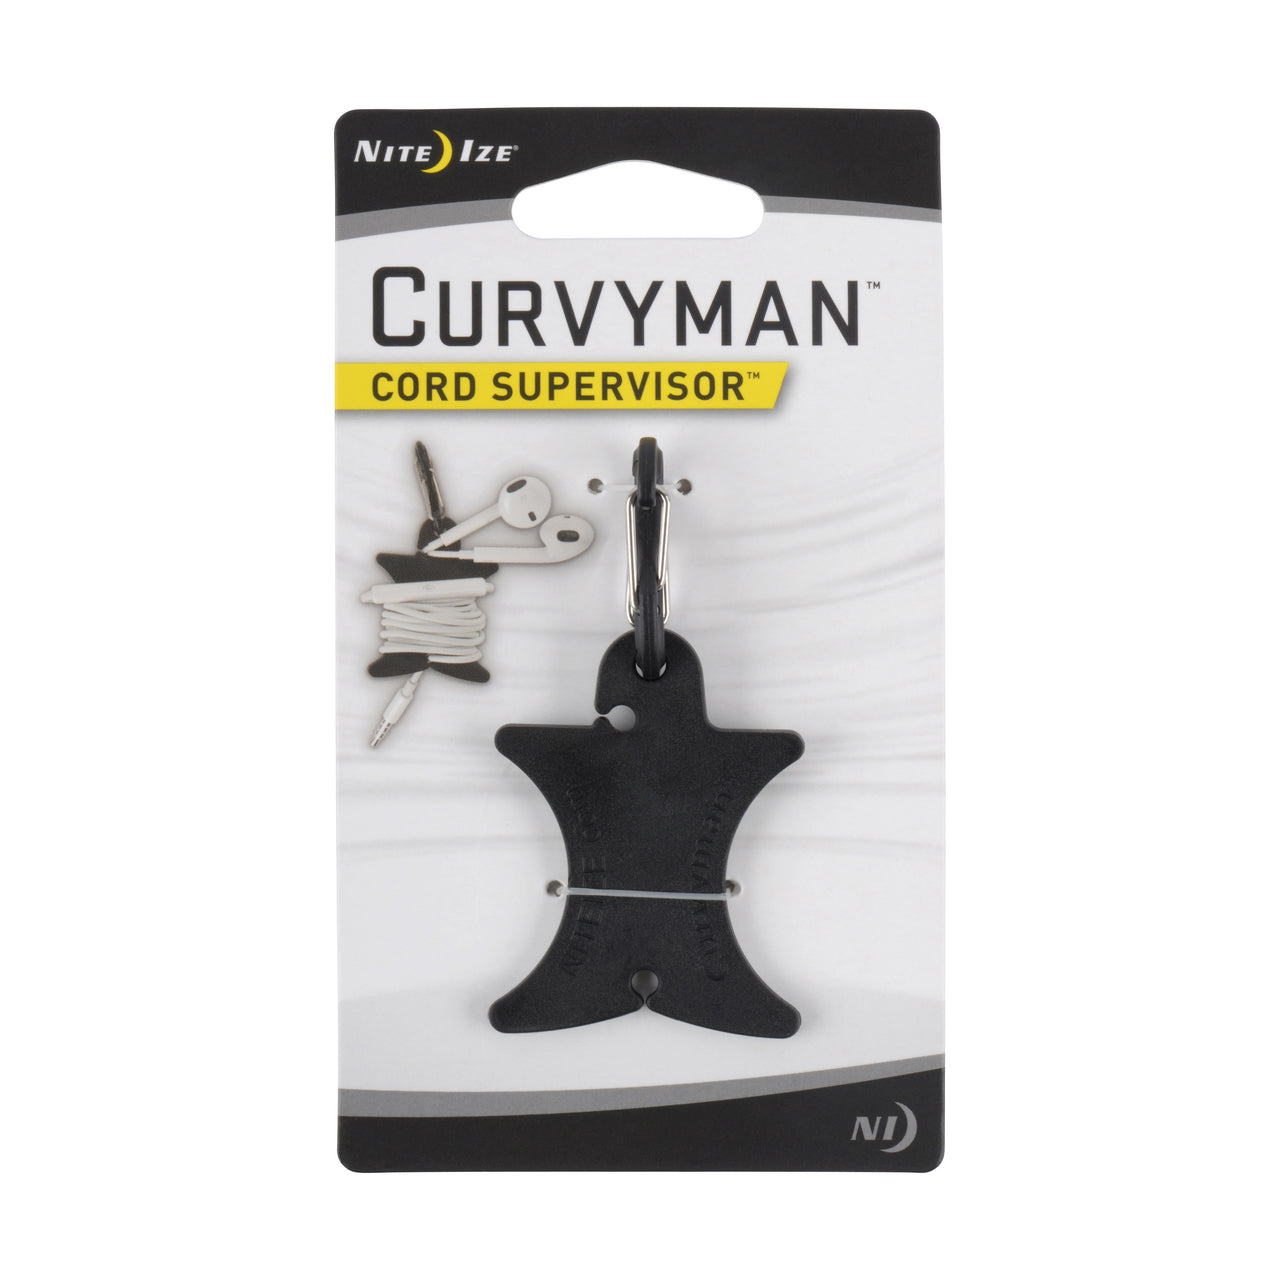 Curvyman™ Cord Supervisor™